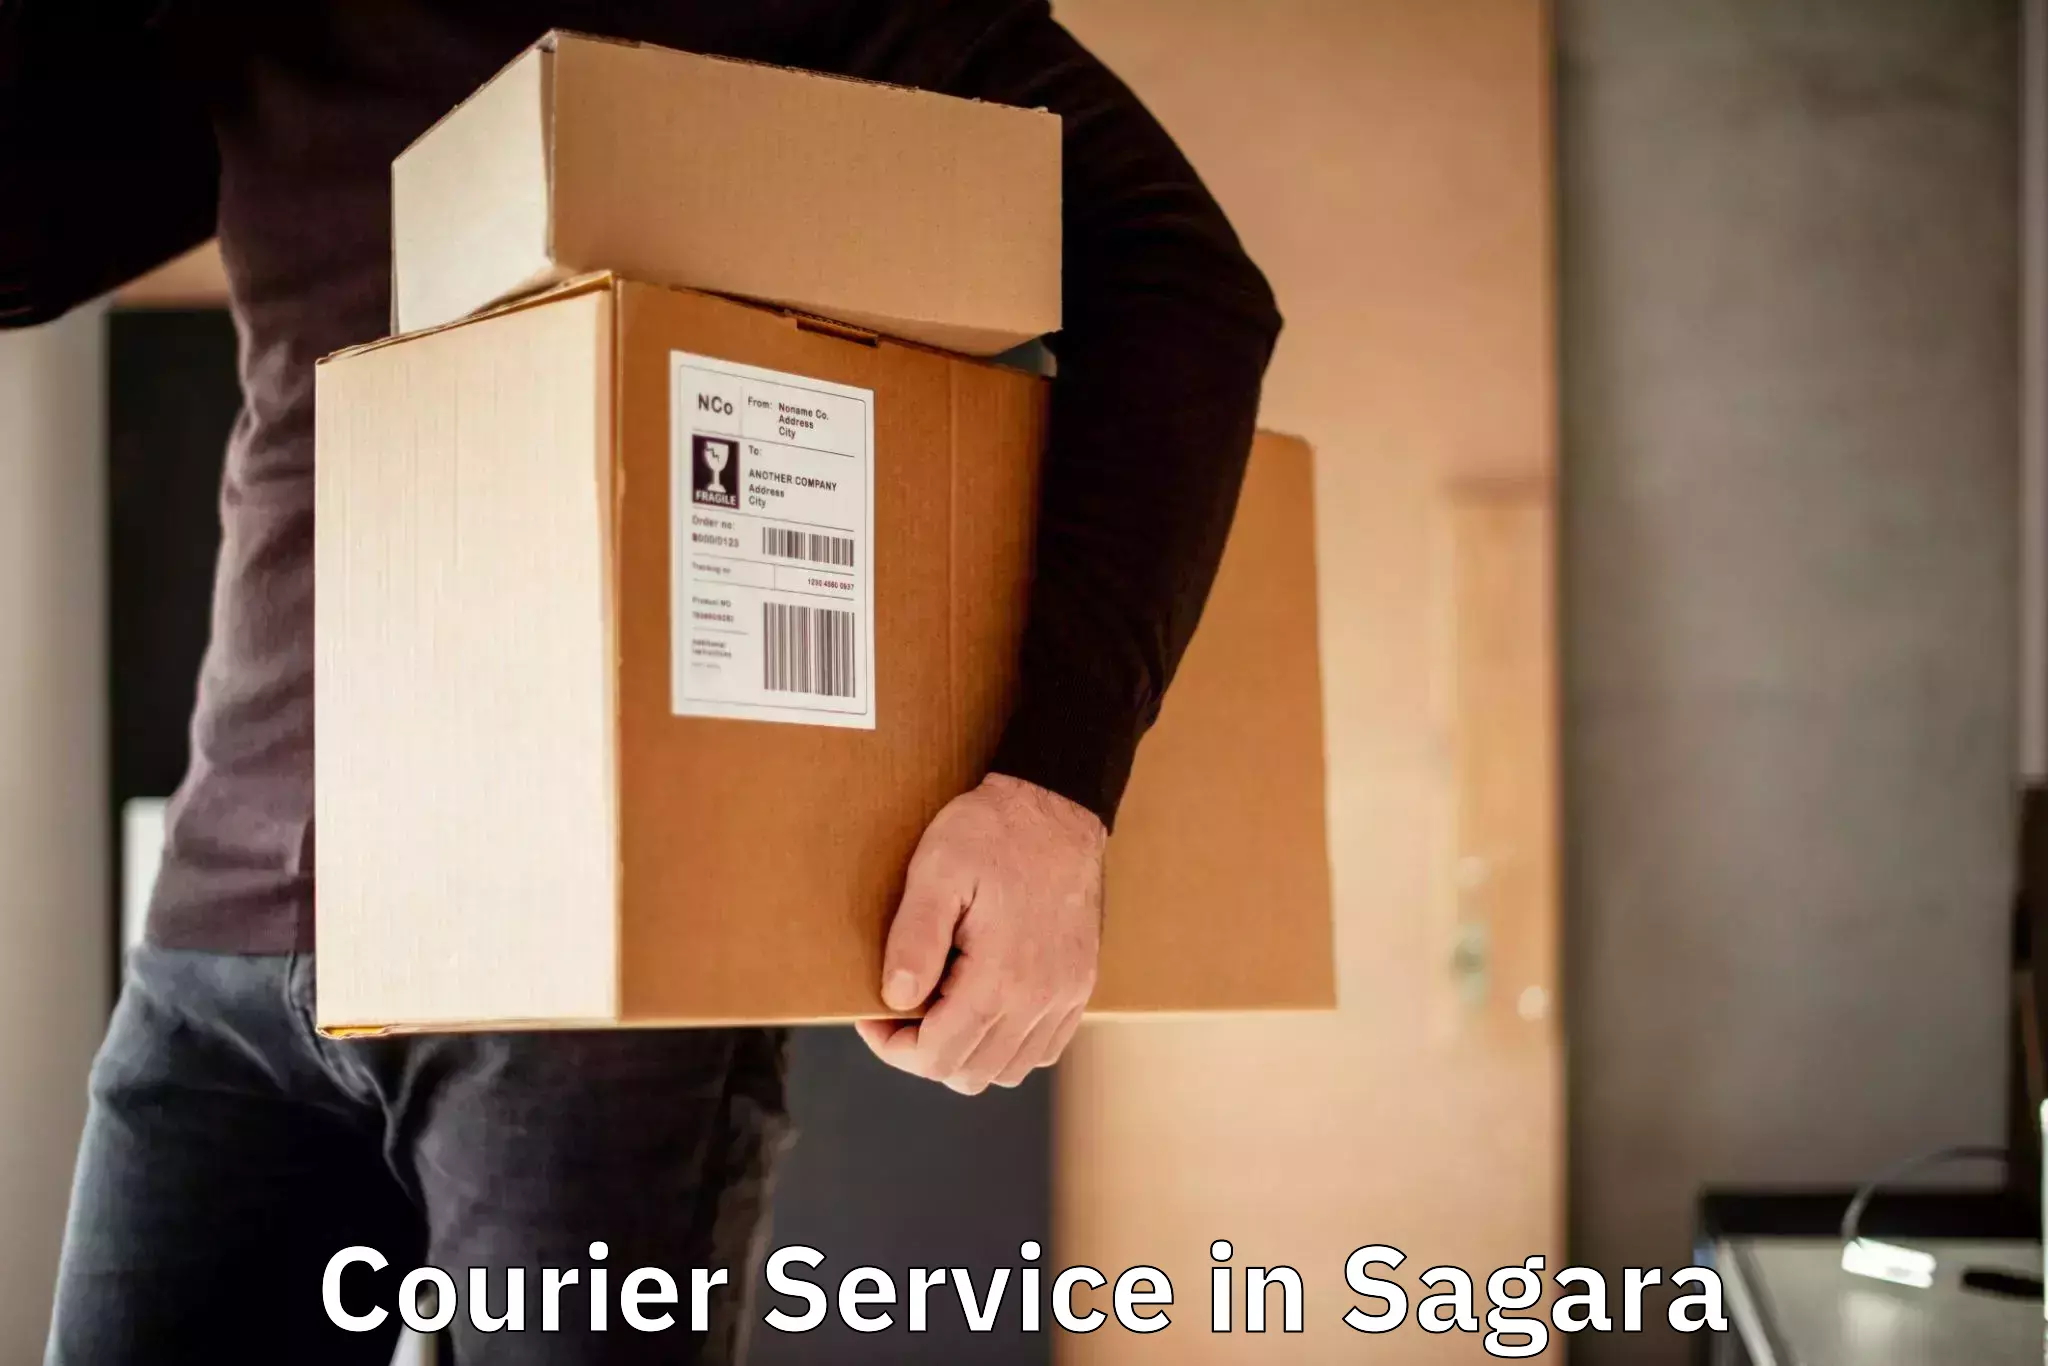 Round-the-clock parcel delivery in Sagara